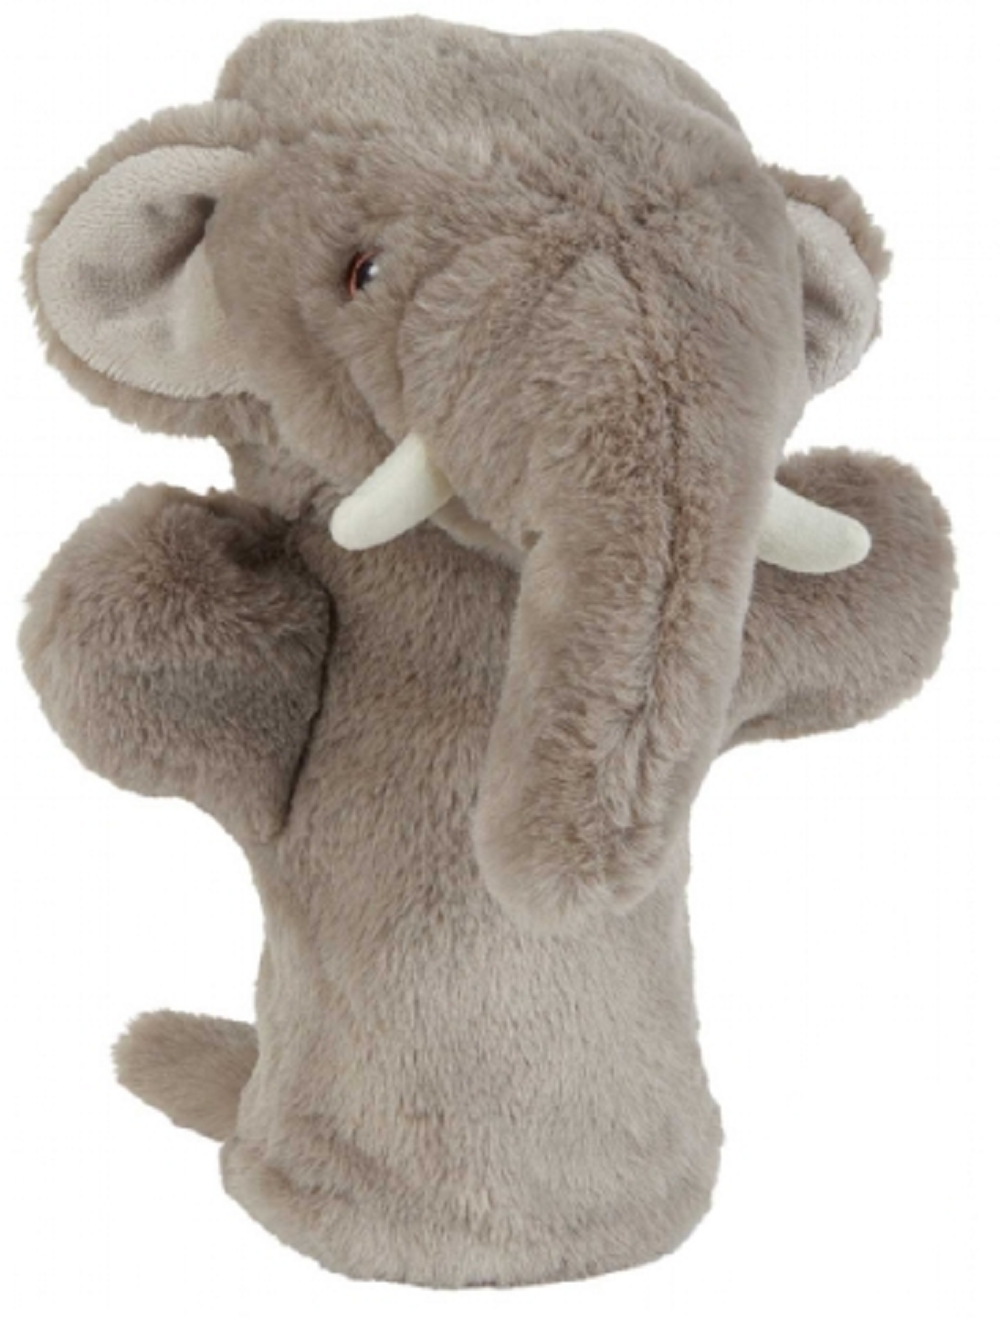 Ravensden Soft Toy Plush Elephant Hand Puppet